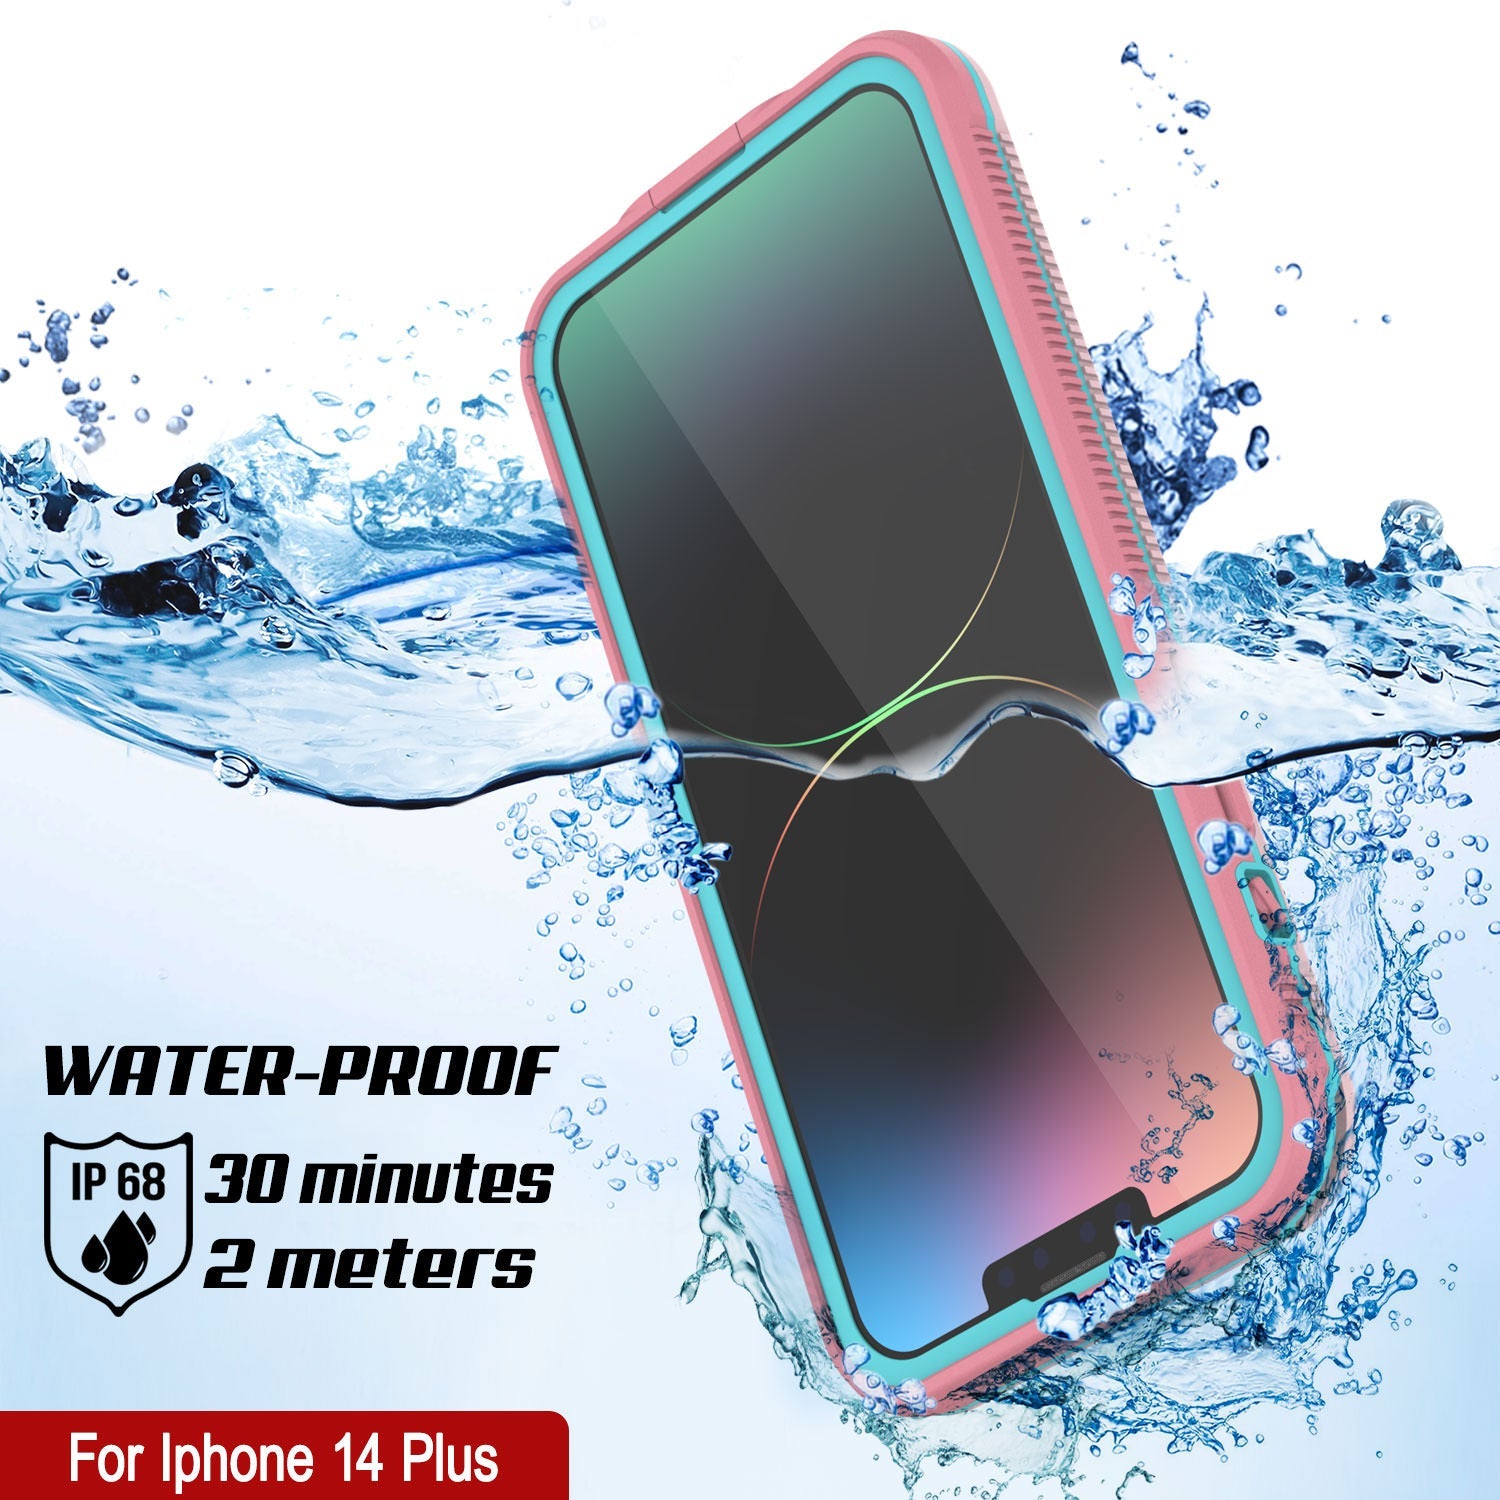 Punkcase iPhone 14 Plus Waterproof Case [Aqua Series] Armor Cover [Pink]